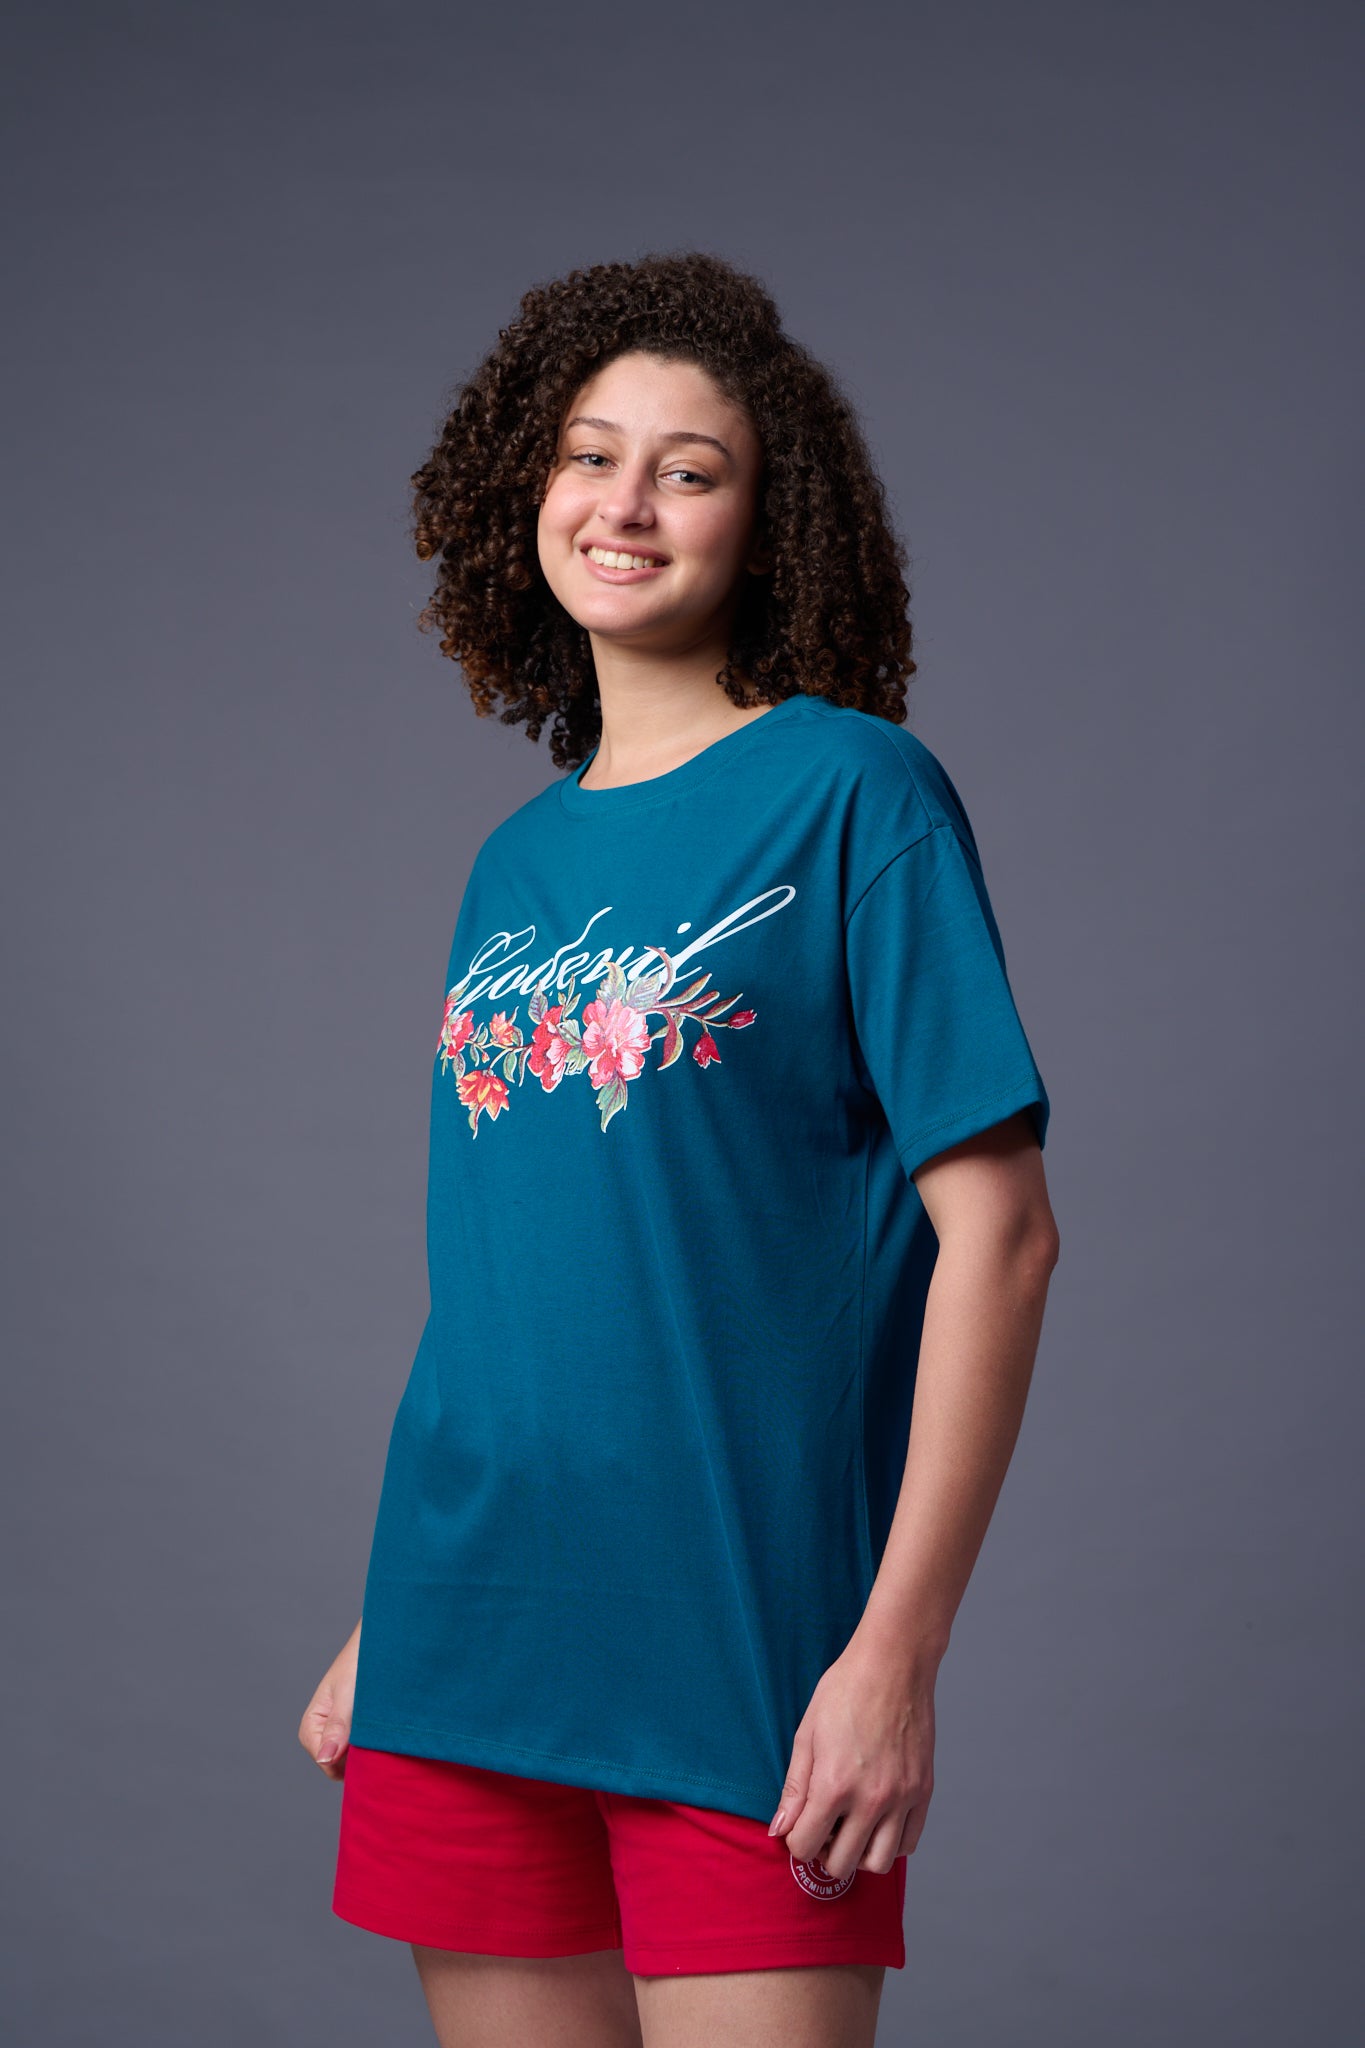 Go devil With Flower Printed Royal Blue Oversized T-Shirt for Women